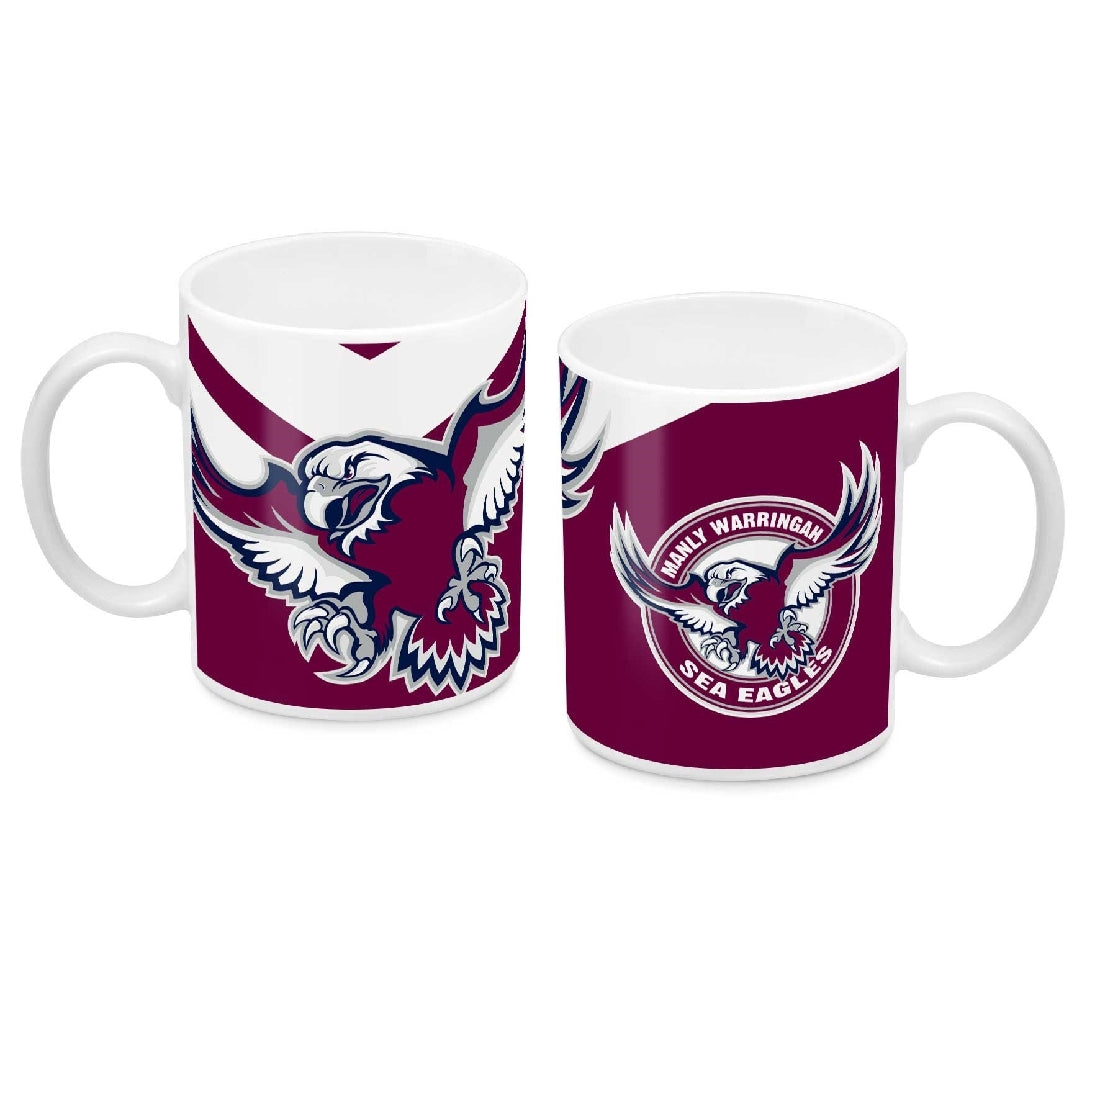 Manly Sea Eagles Ceramic Mug